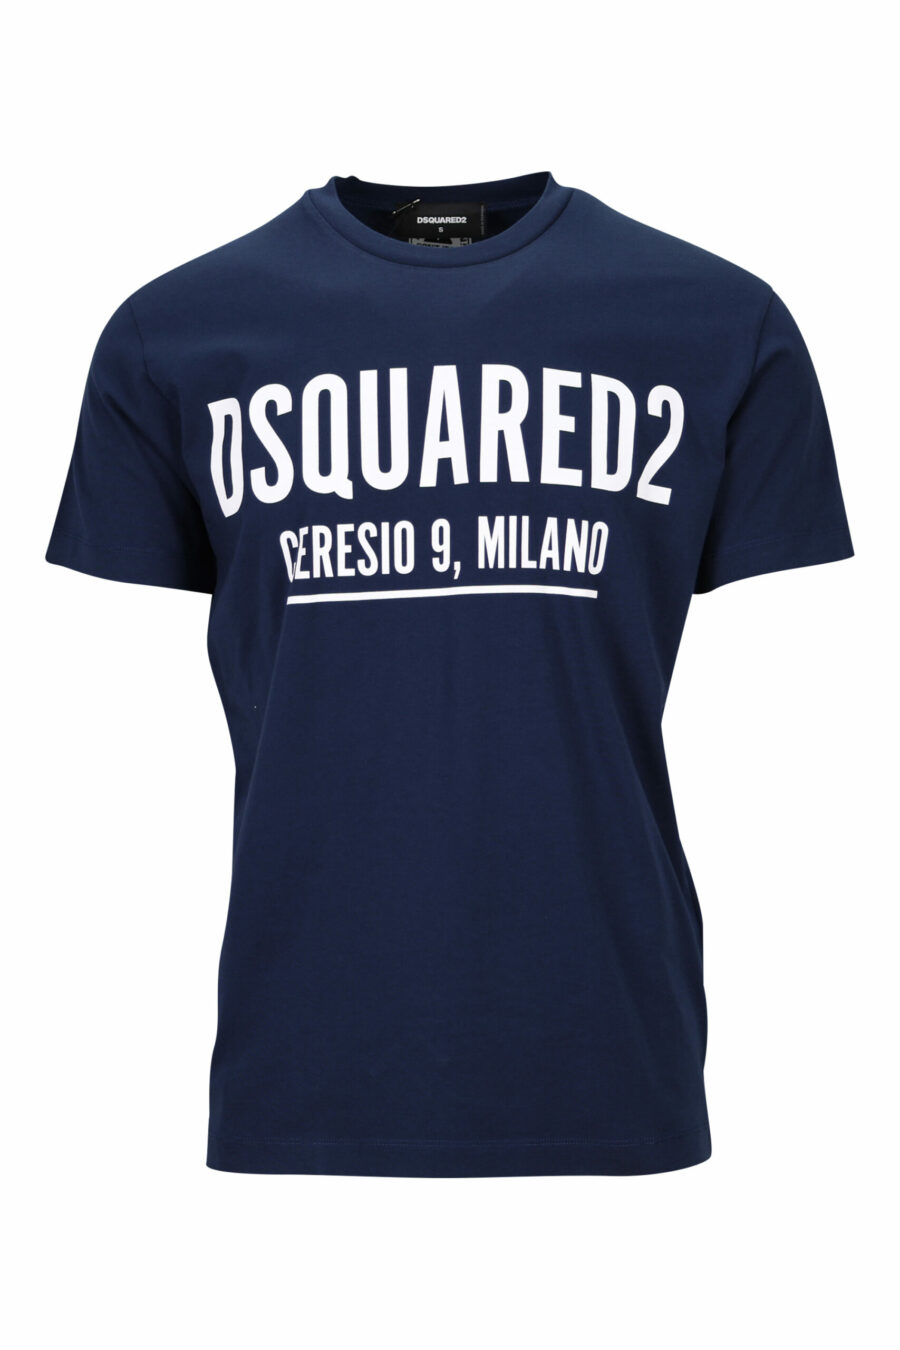 T-shirt azul escura com o maxilogo "ceresio 9, milano" - 8054148504915 scaled